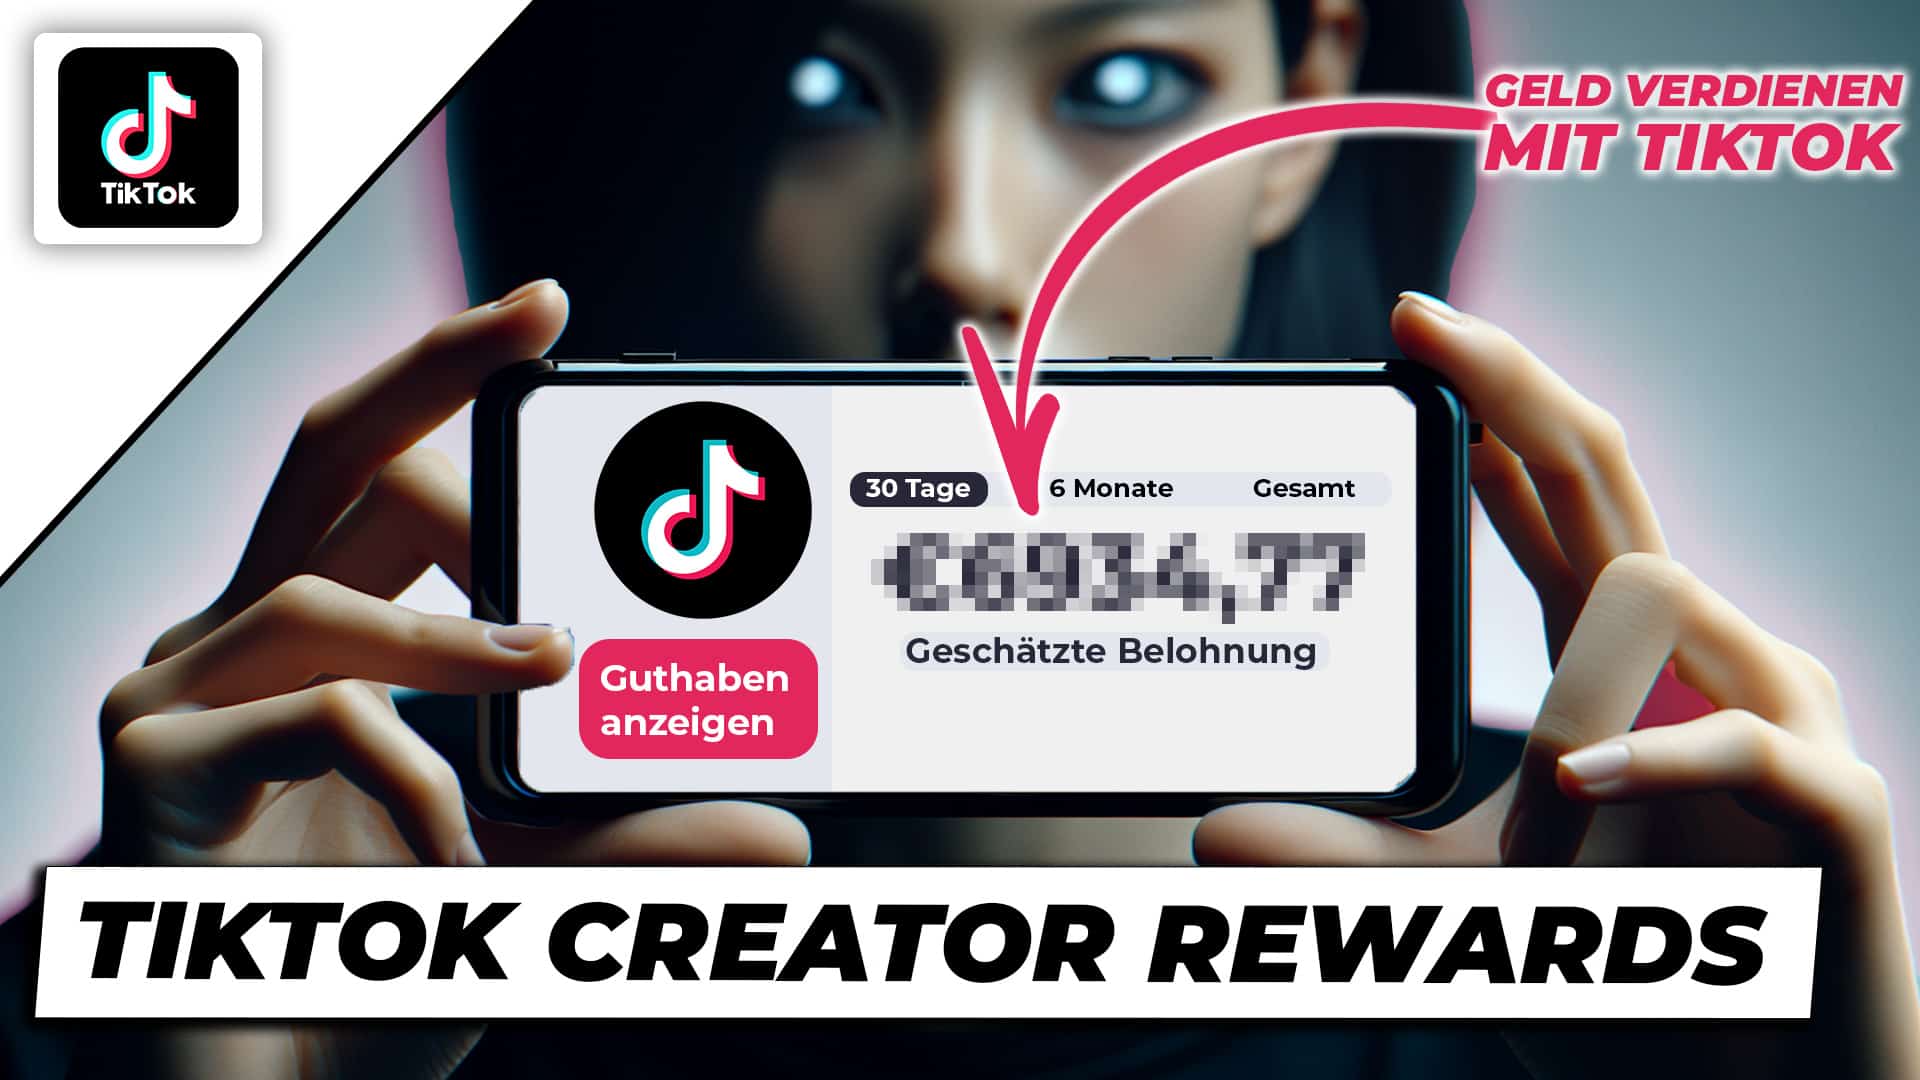 TikTok Creator Rewards Program – Earn money with TikTok